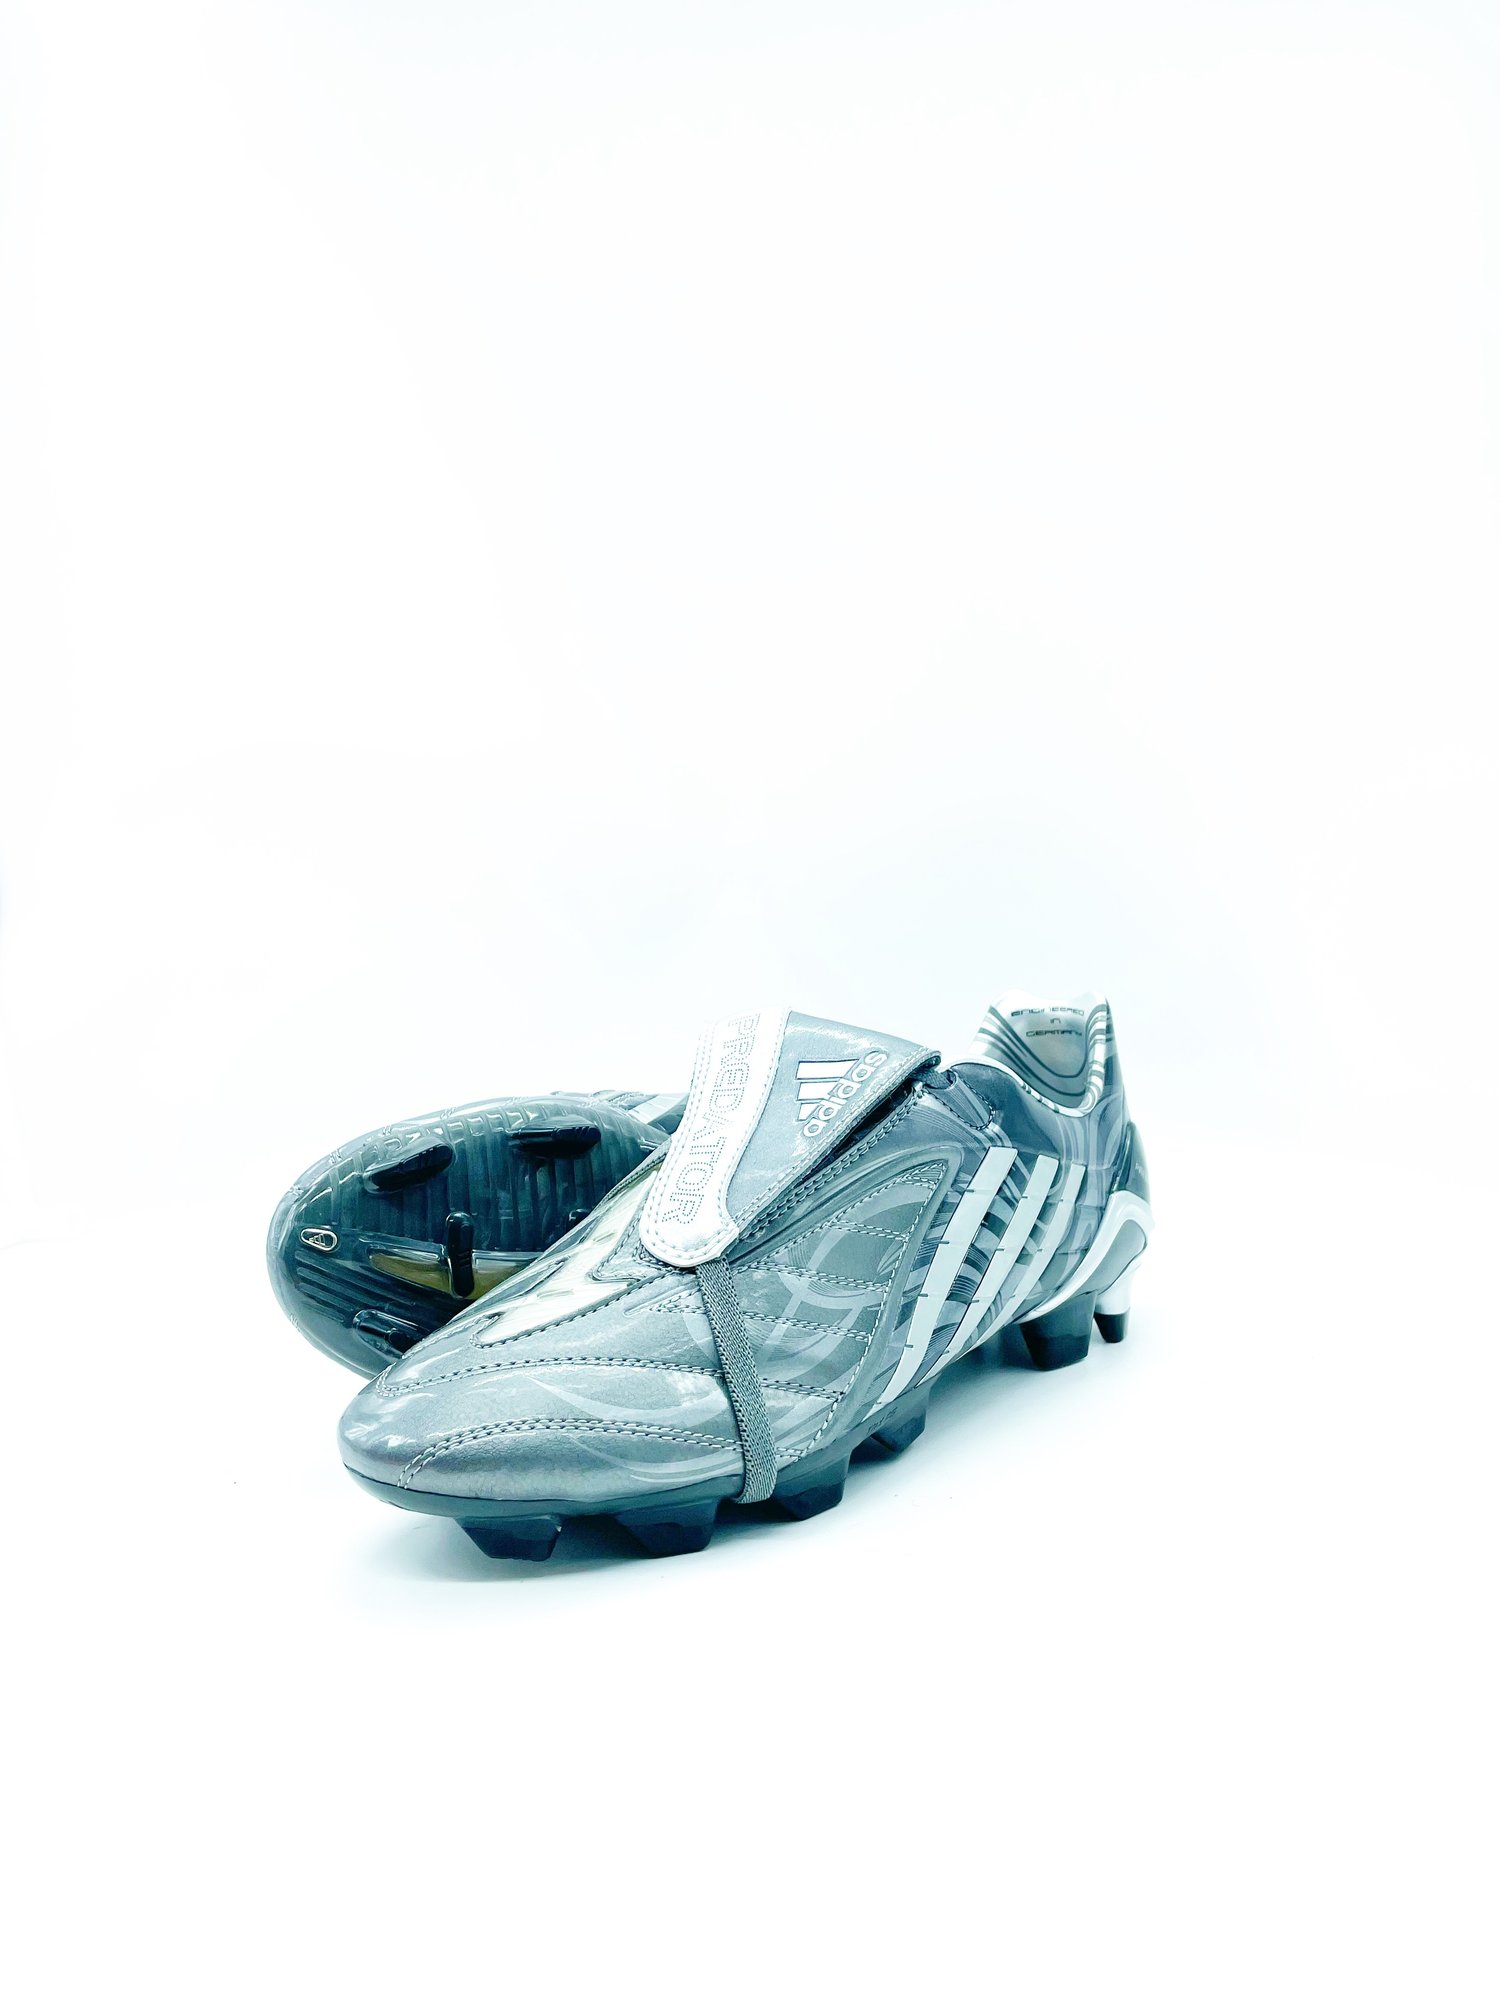 Image of Adidas Predator Powerswerve Grey SG or FG 